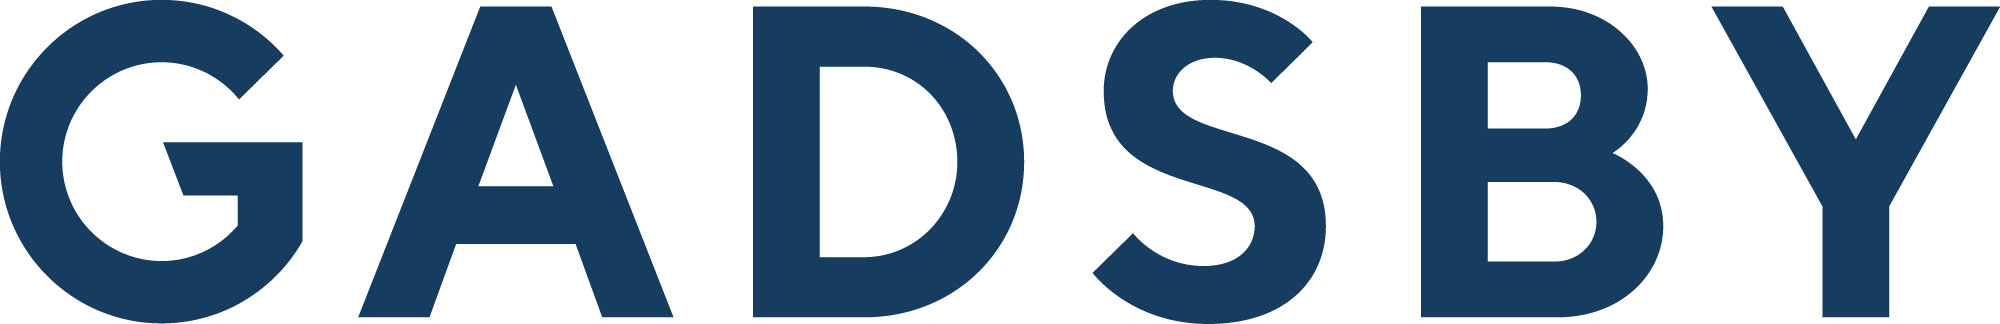 Company logo image - Gadsby